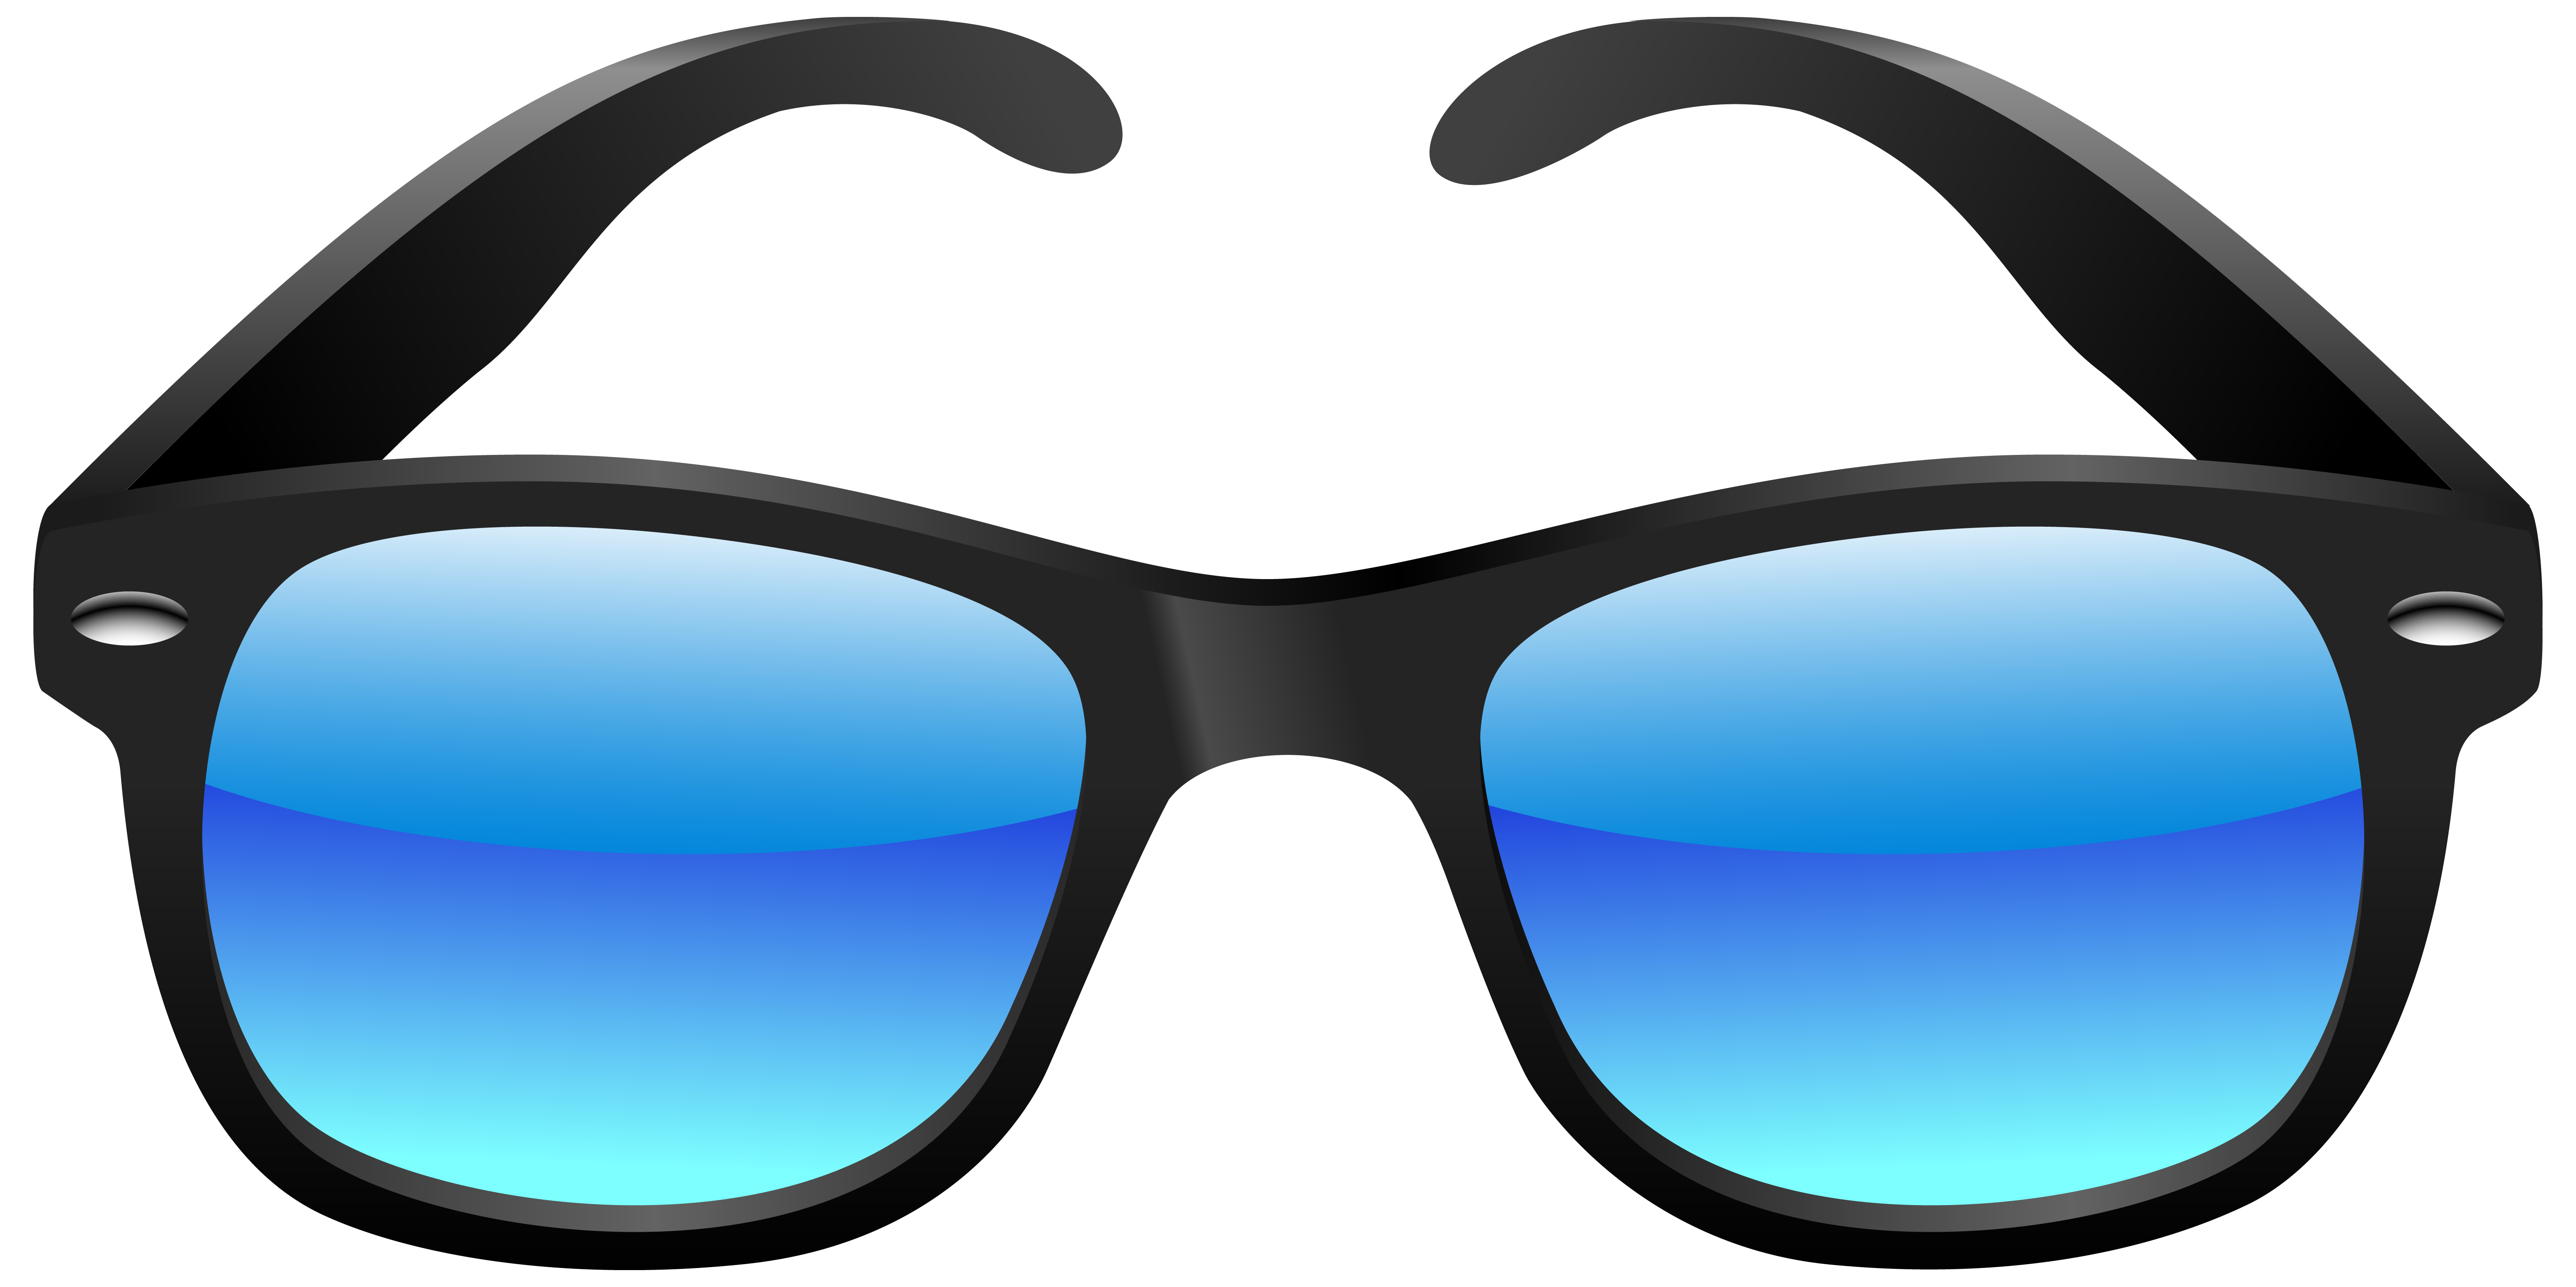 Clip art of sunglasses. Clipart mustache stylish glass